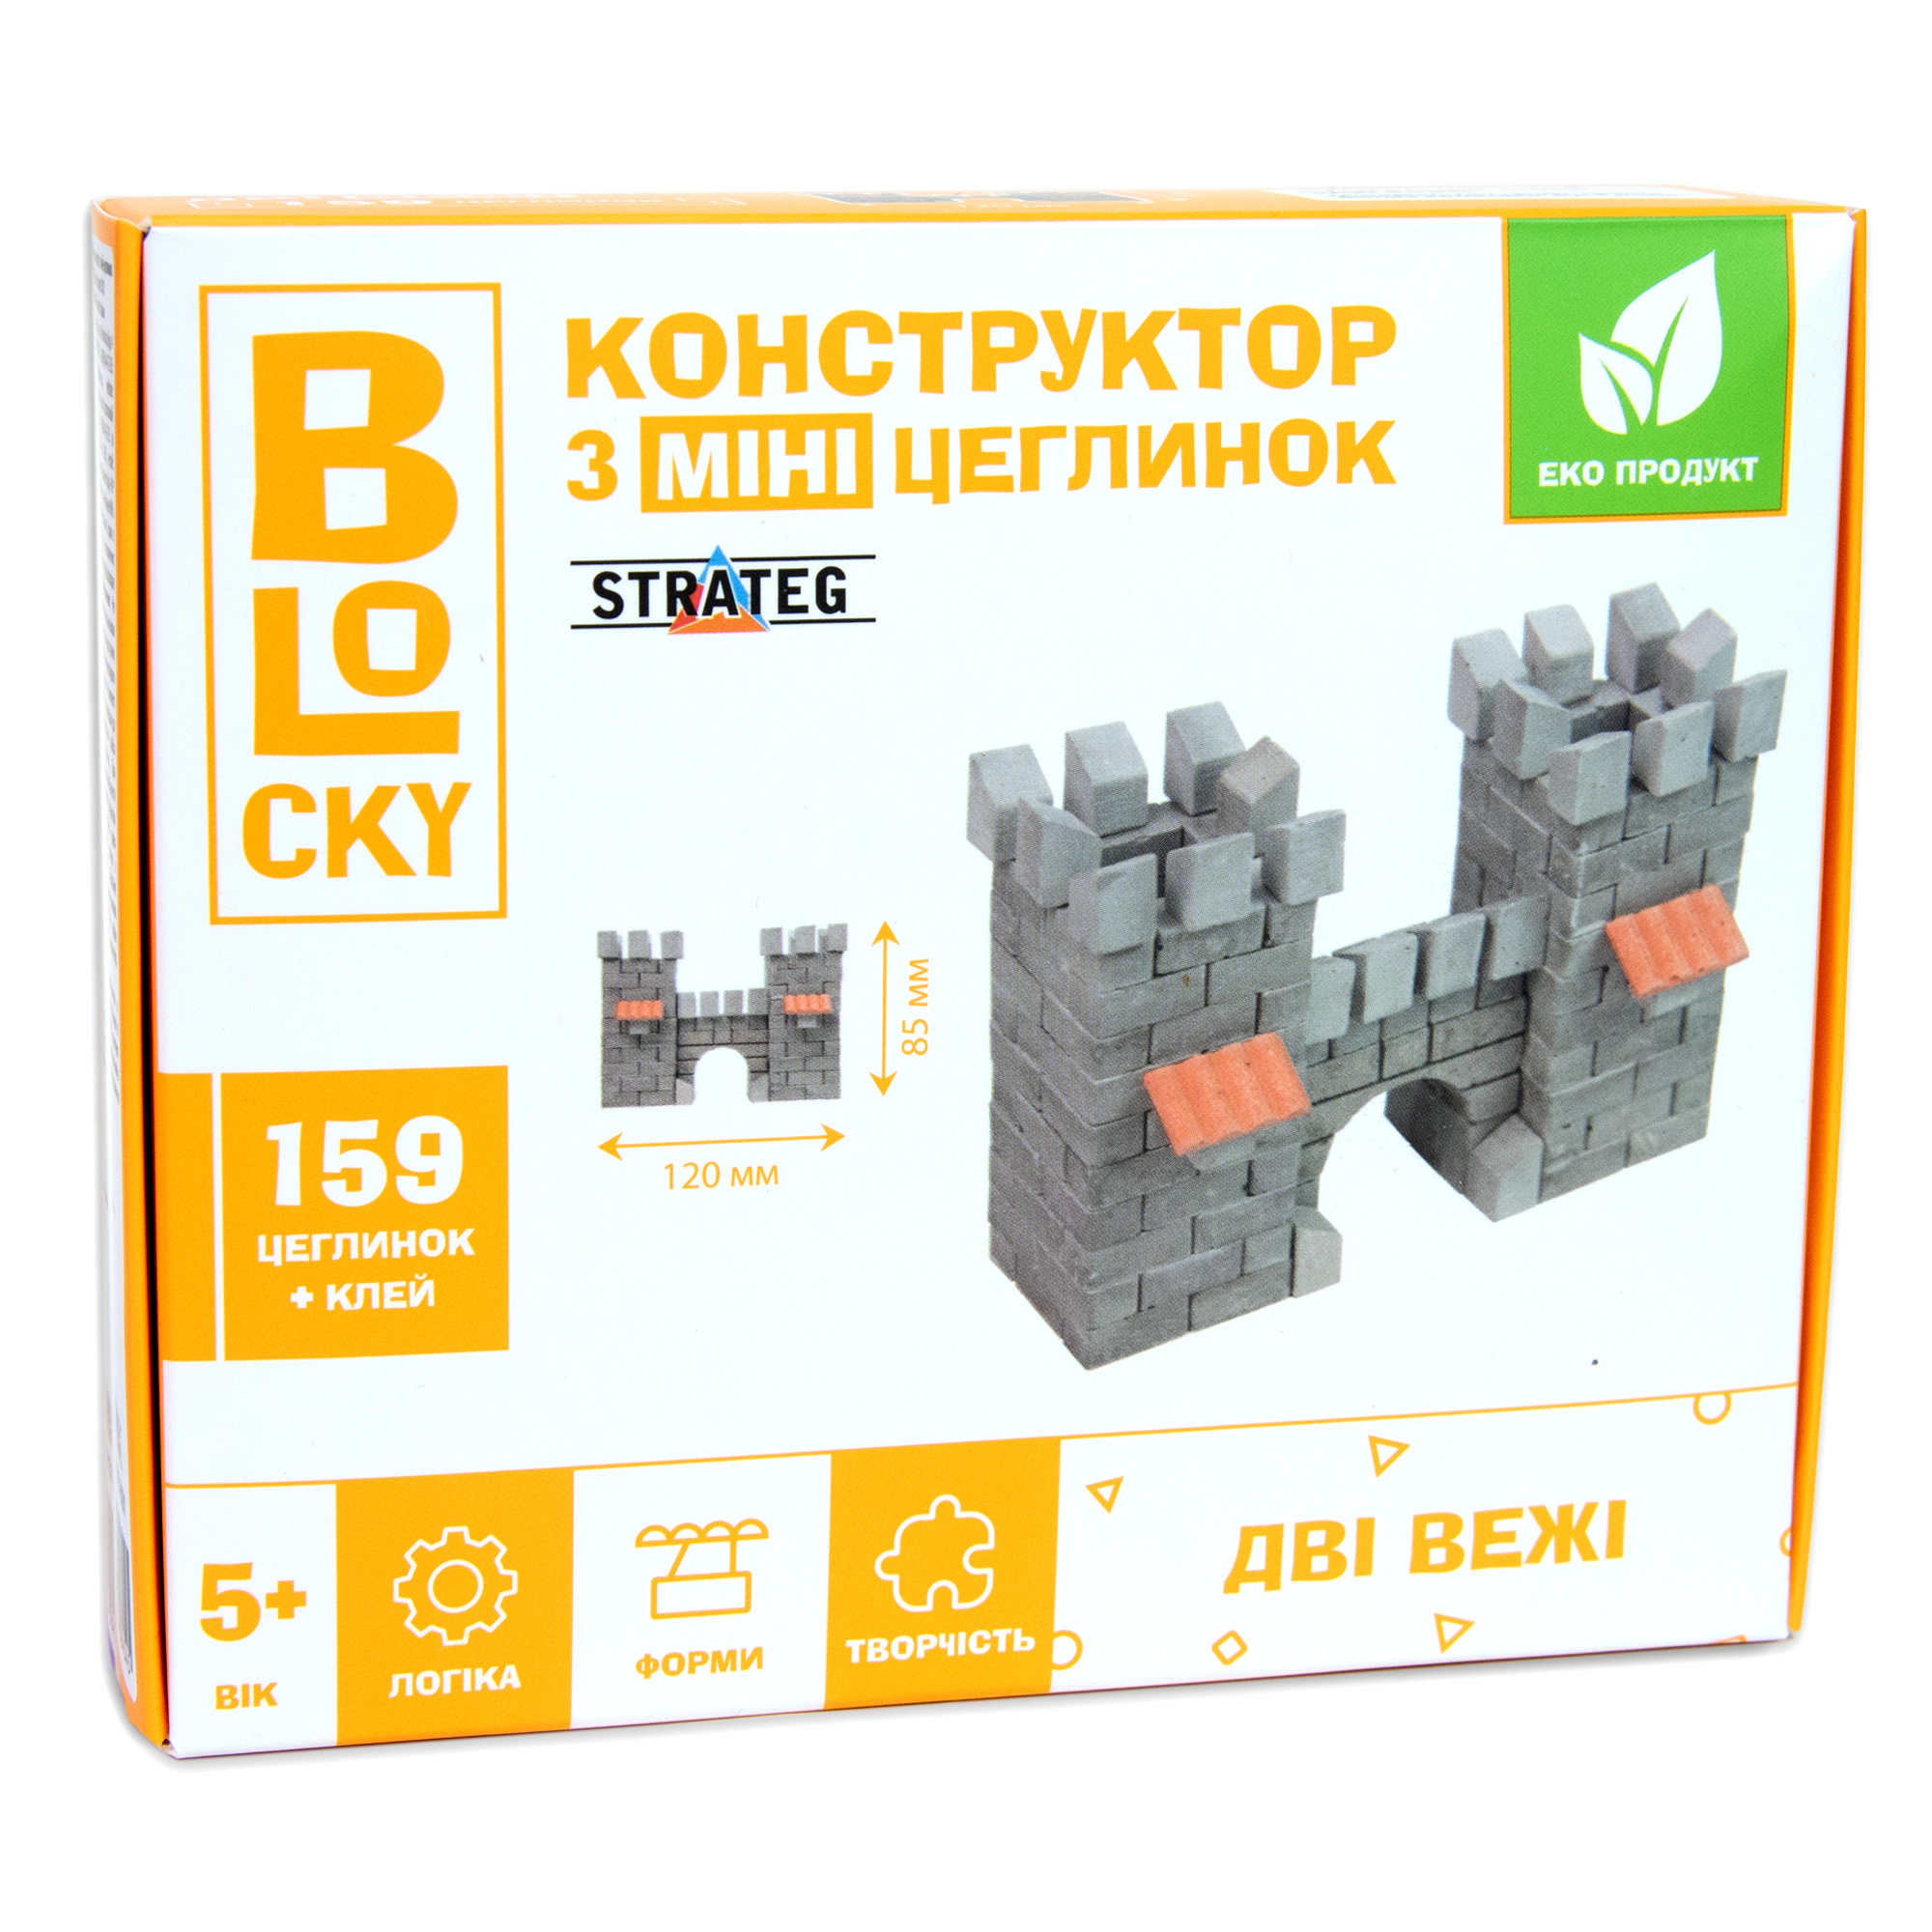 BLOCKY Mini-Steinbauset Two Strateg Towers (31021)